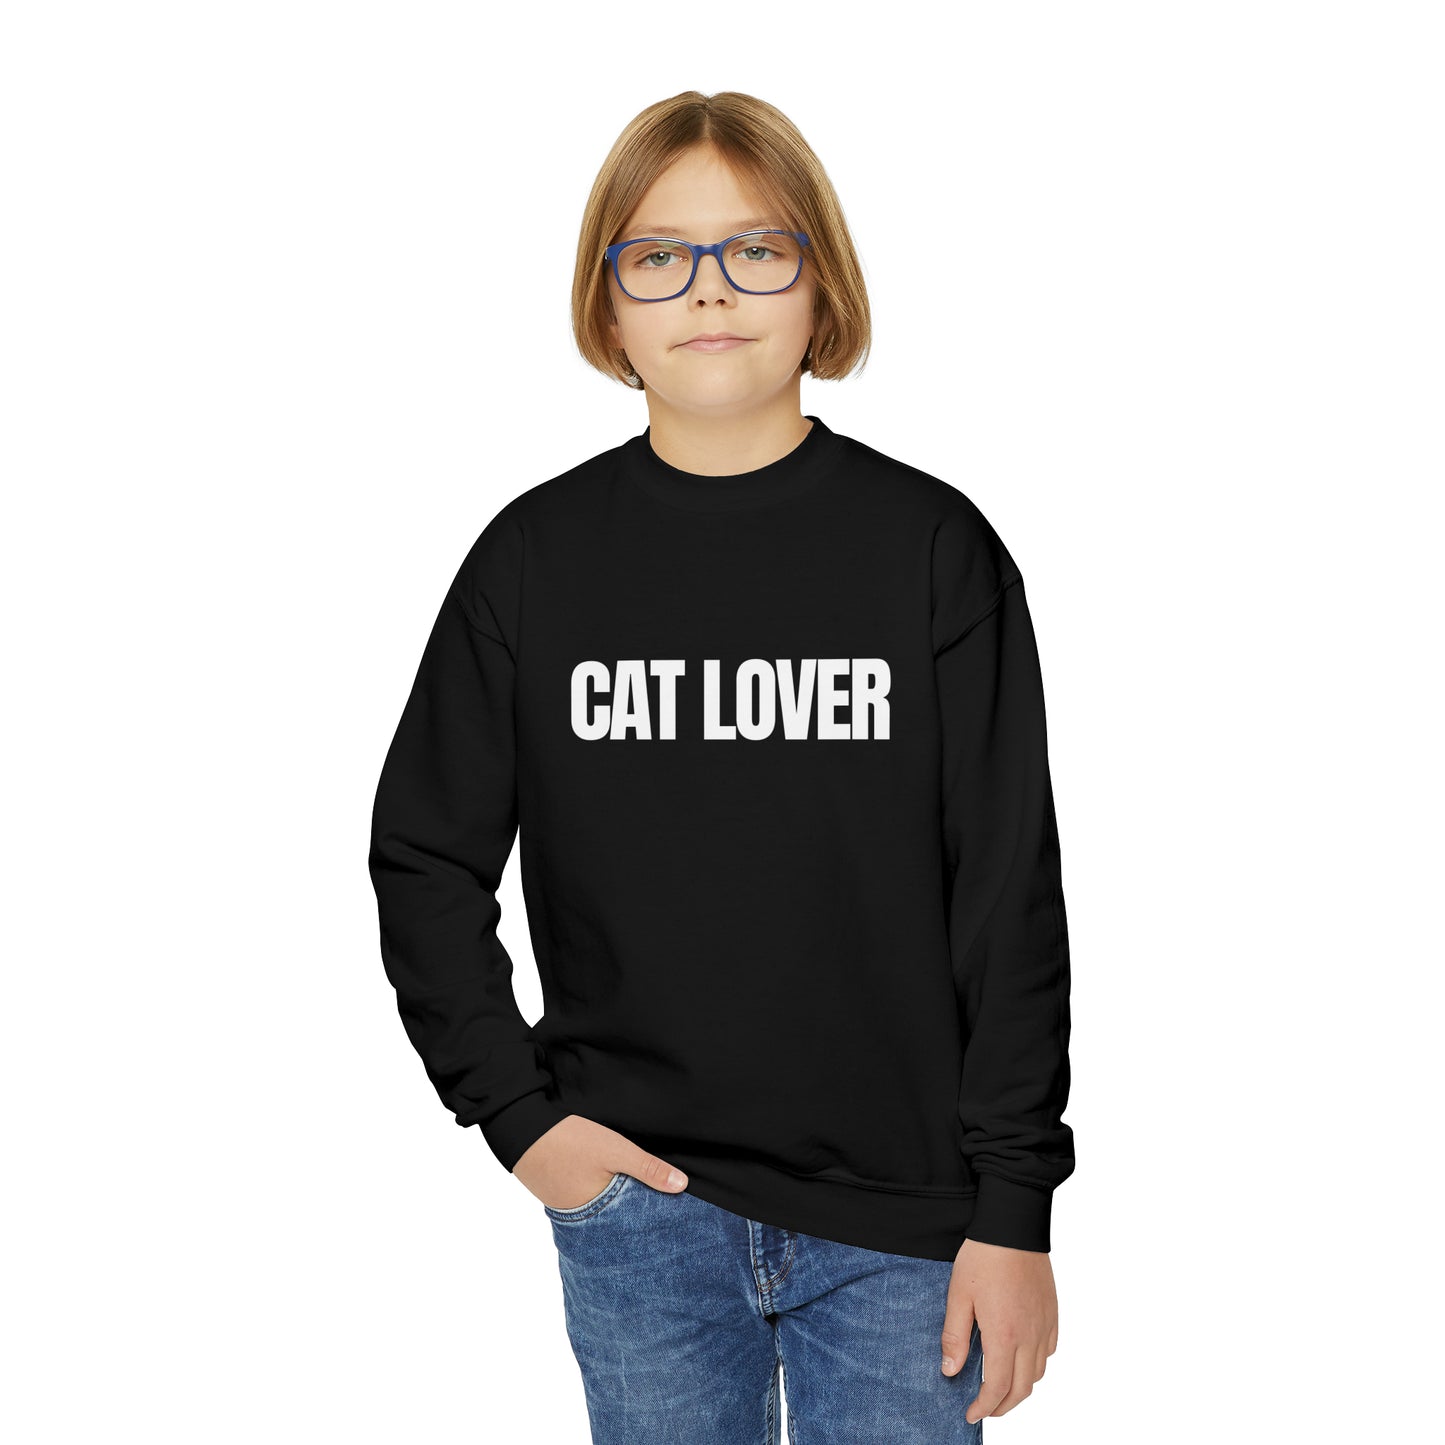 CAT LOVER Youth Crewneck Sweatshirt